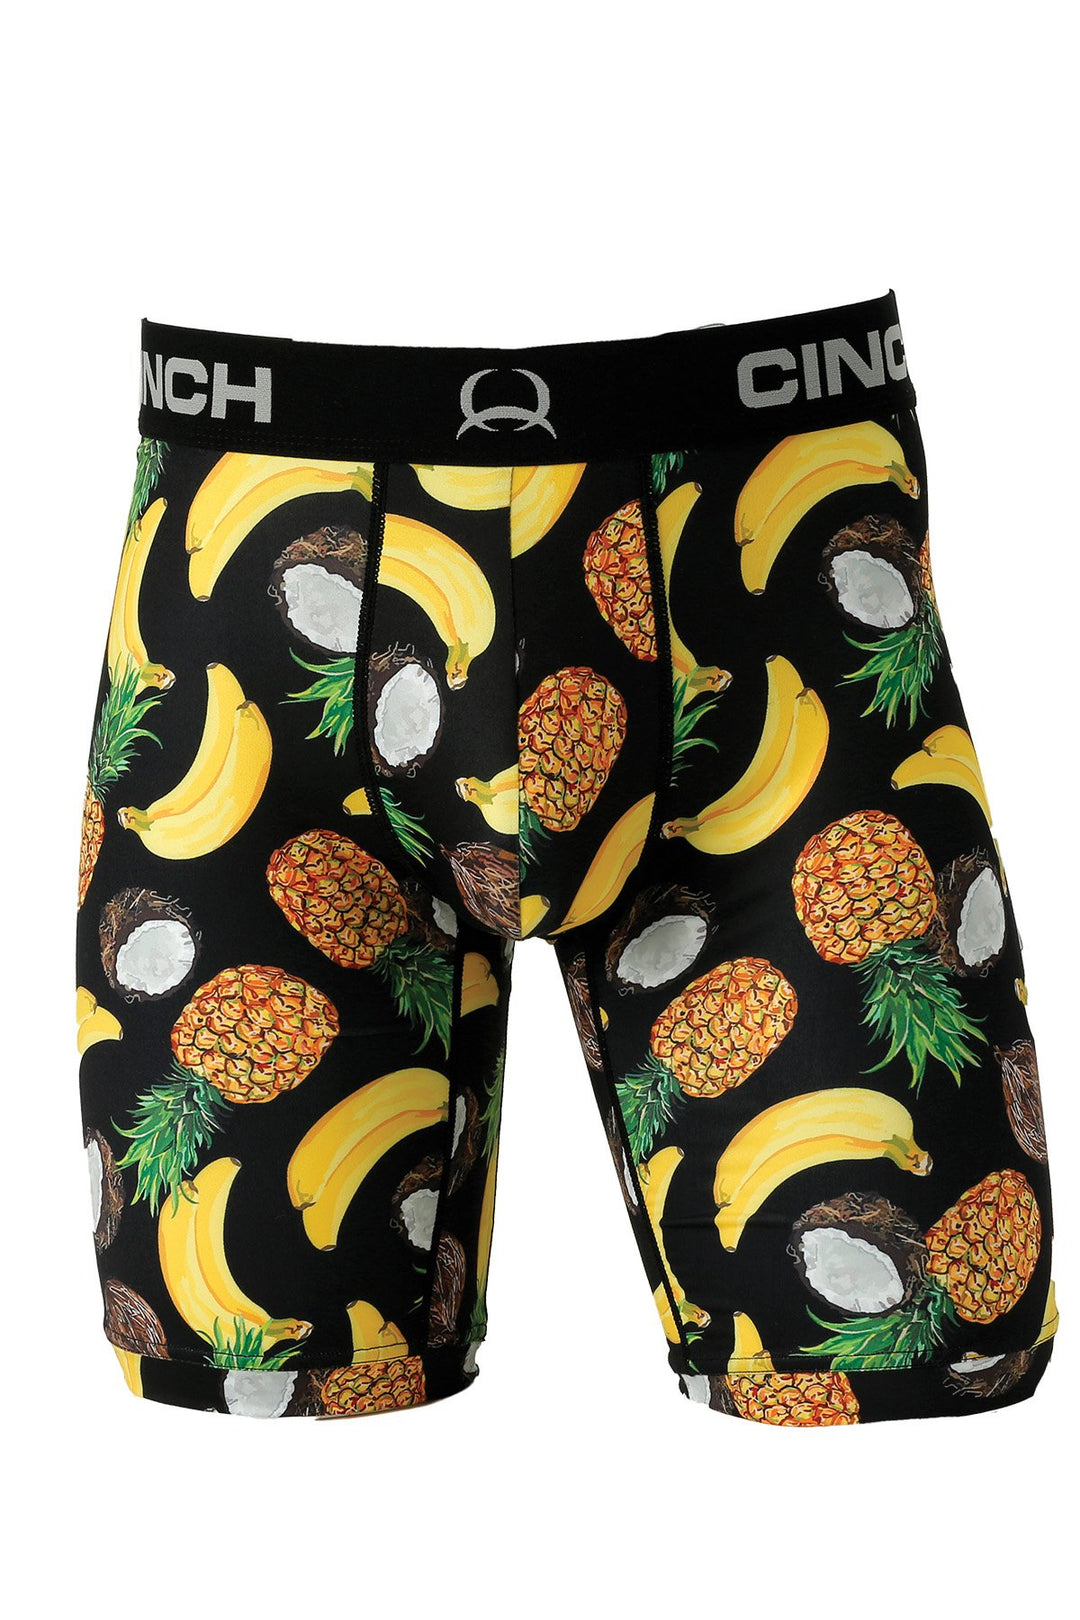 Cinch - Mens Pineapple Boxer Briefs